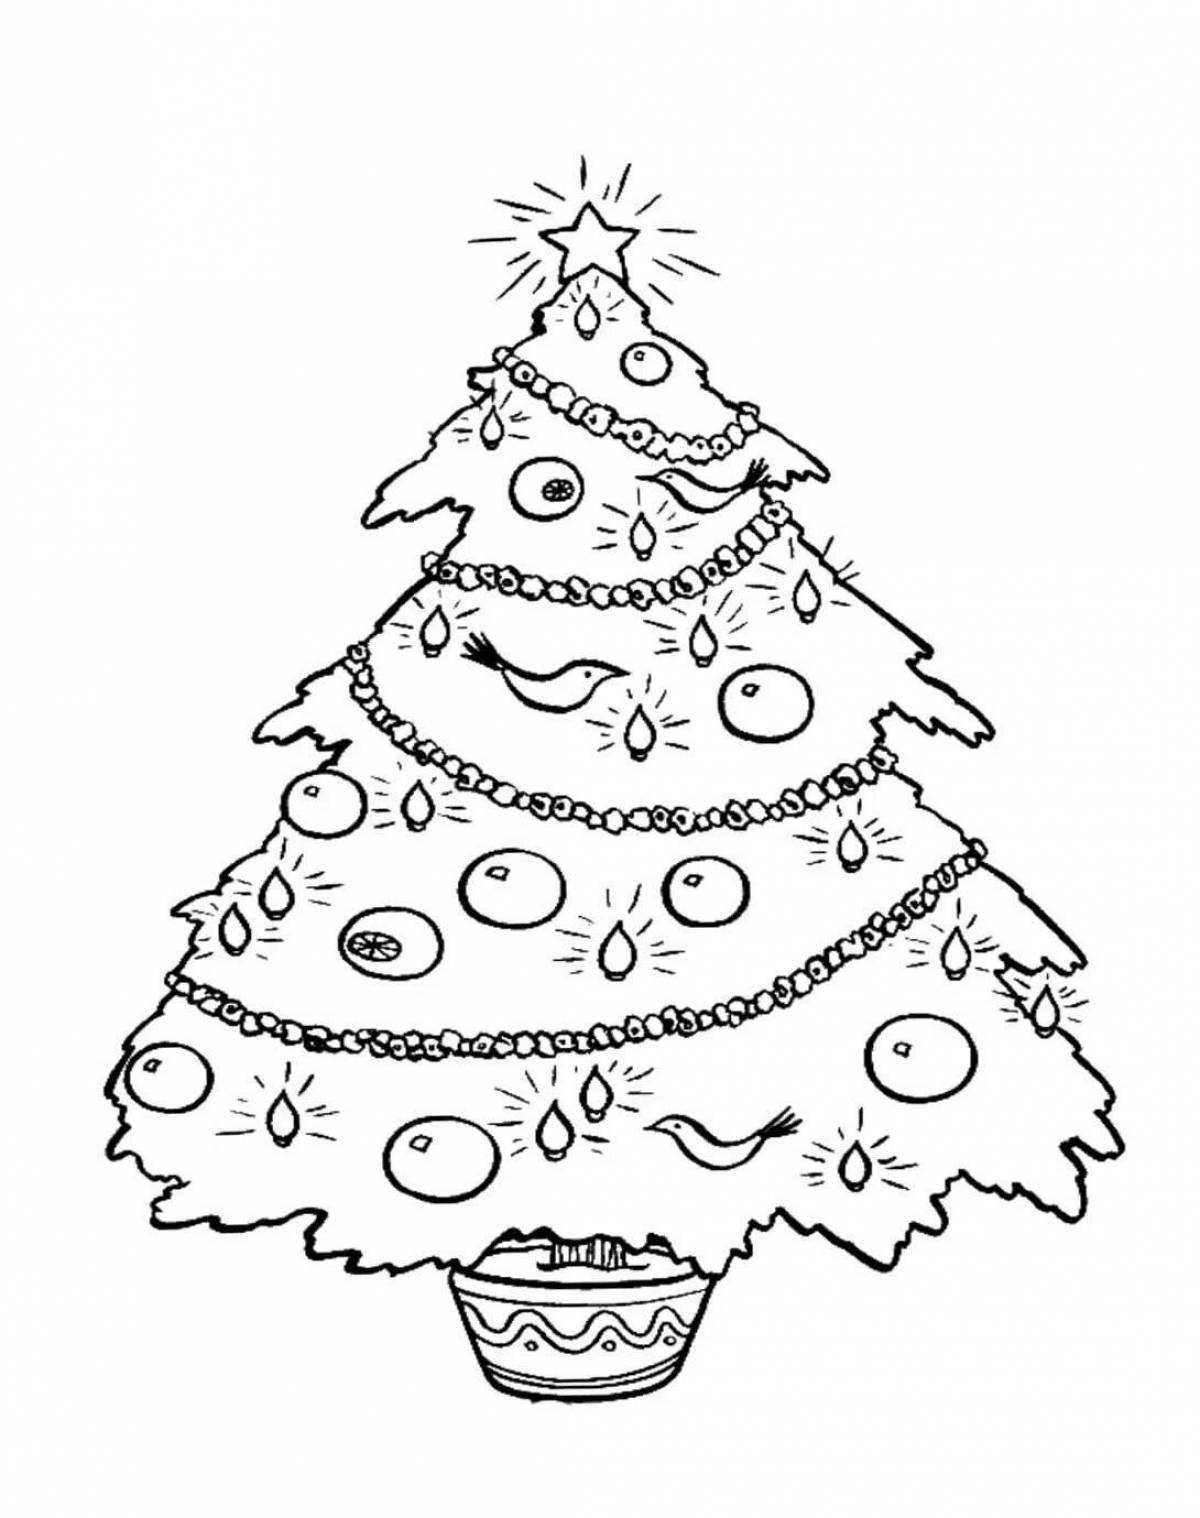 Adorable Christmas tree coloring page